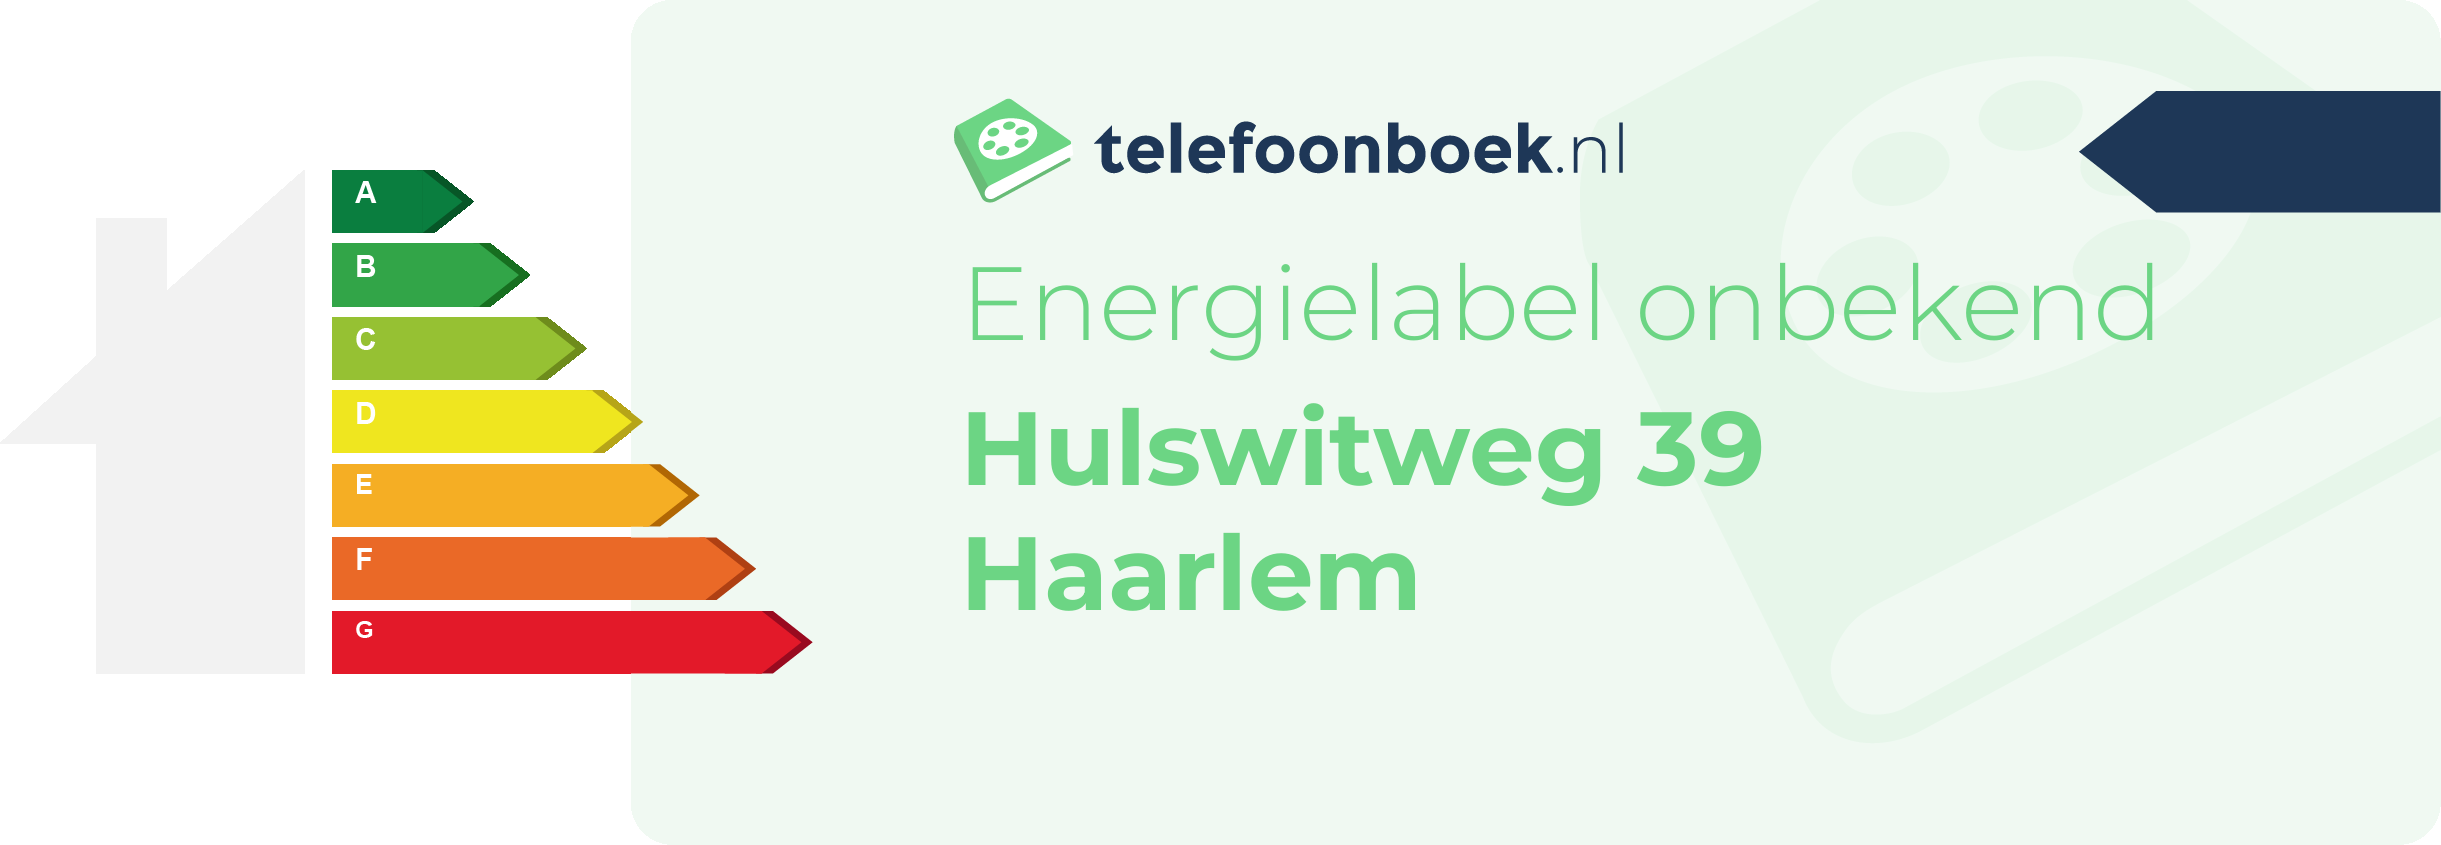 Energielabel Hulswitweg 39 Haarlem